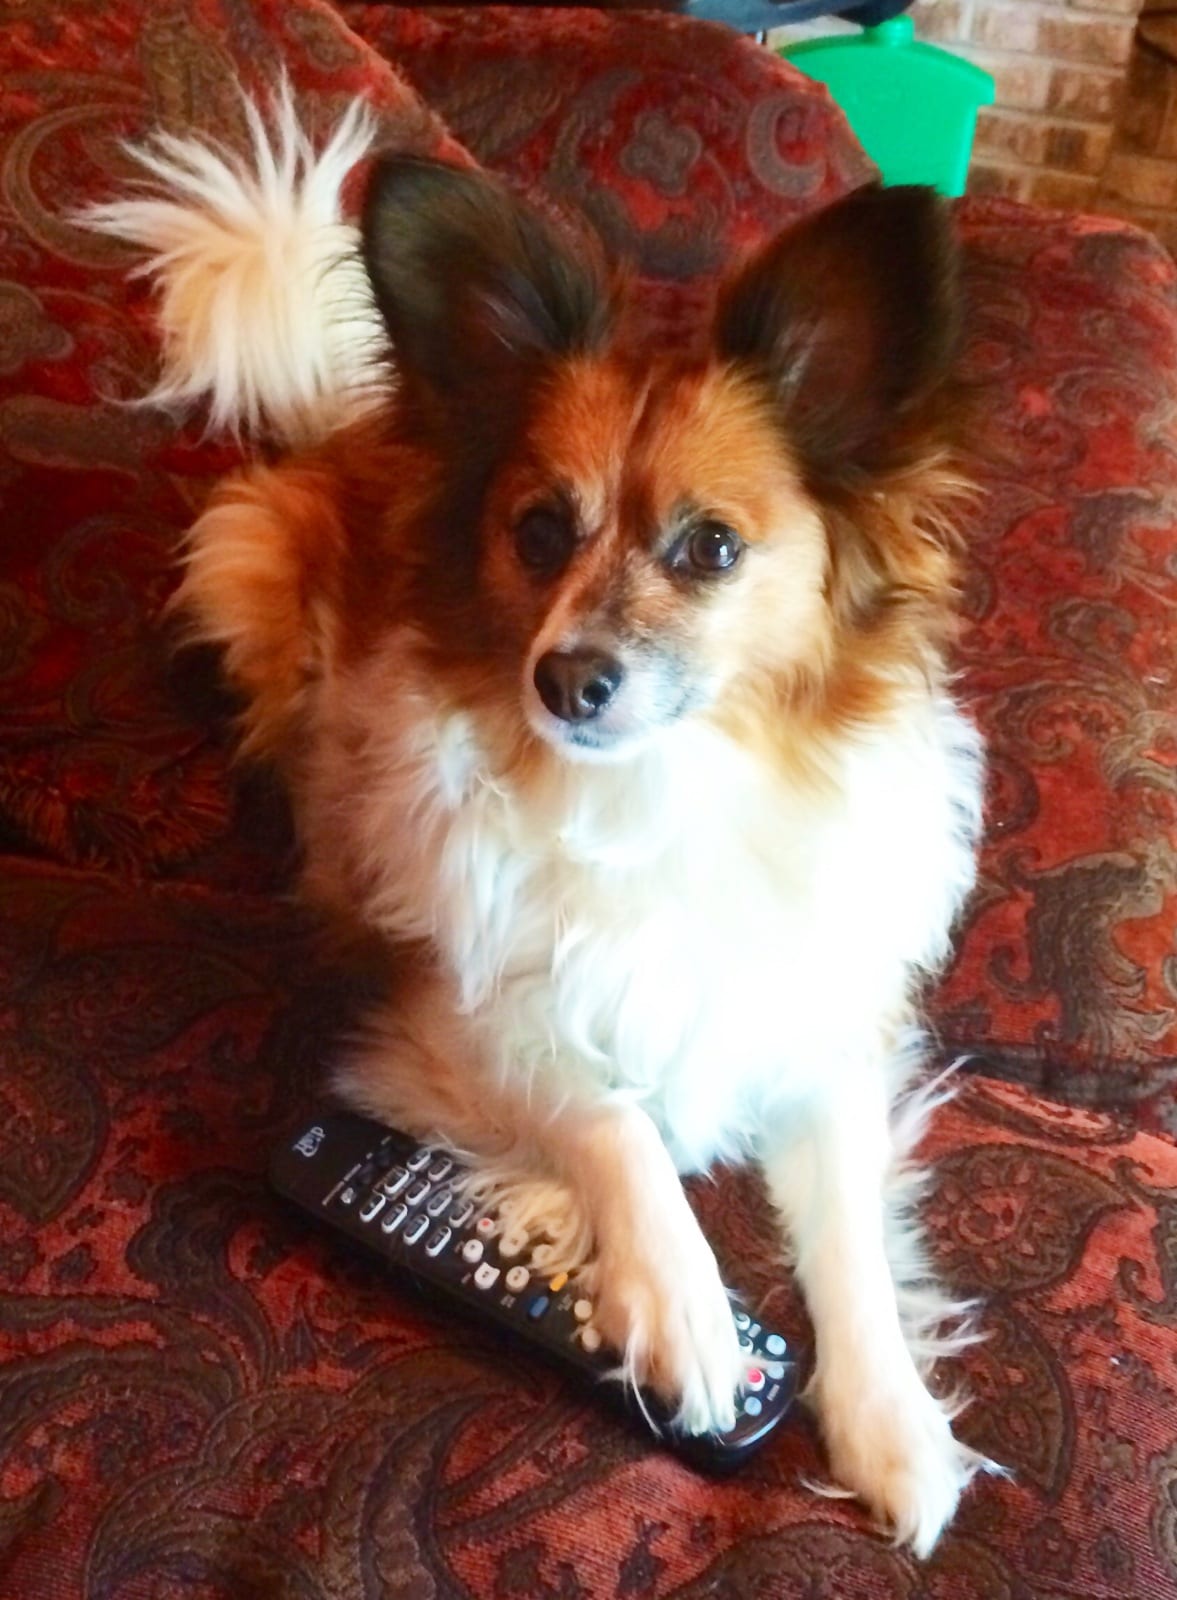 Someone has the remote…